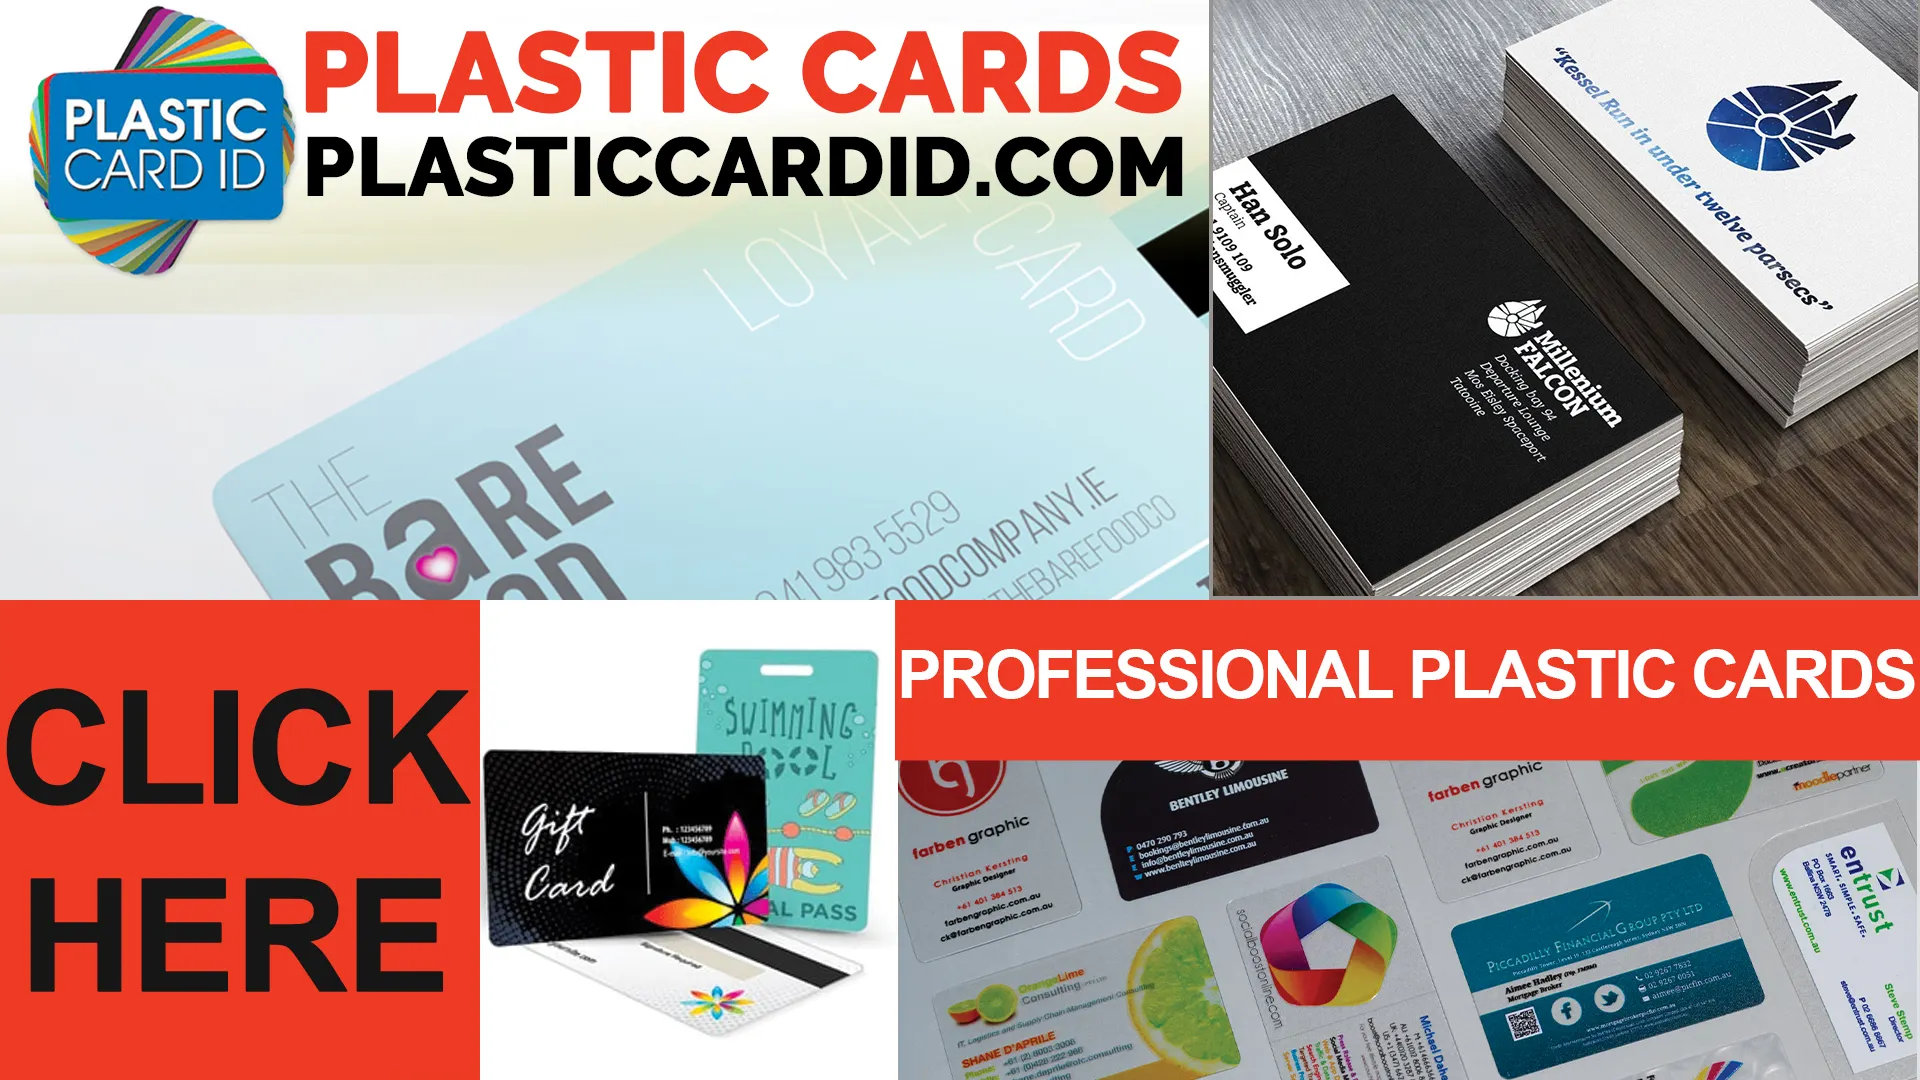 Plastic Card ID
's Advanced Digital Printing Technology